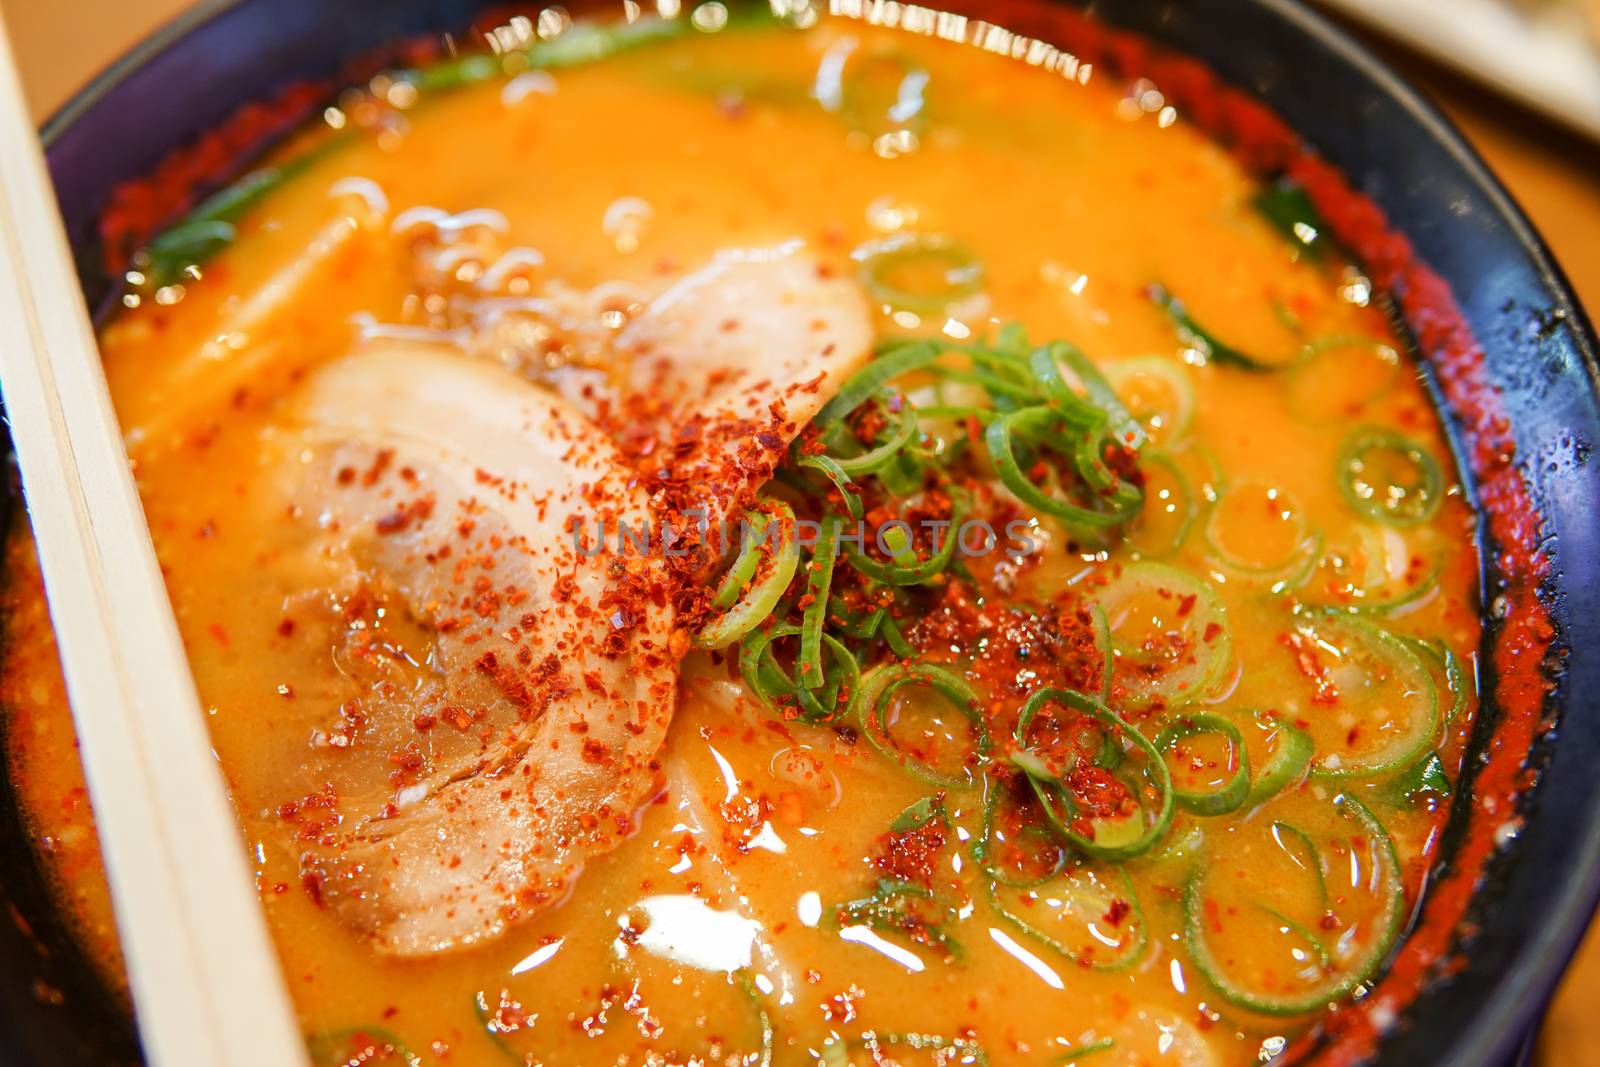 japanese traditional ramen noodle soup